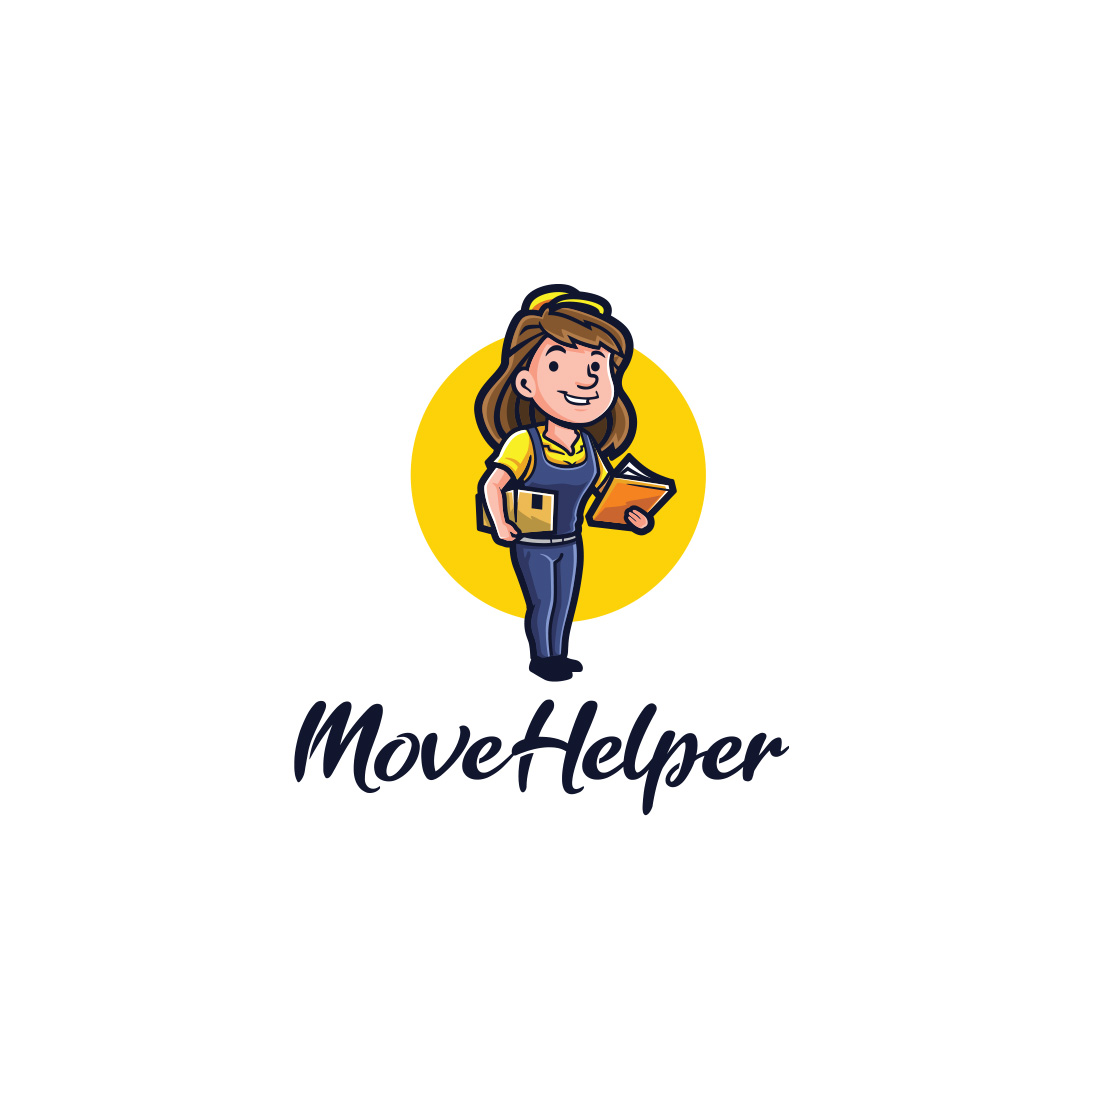 Moverhelper Character Logo Design preview image.